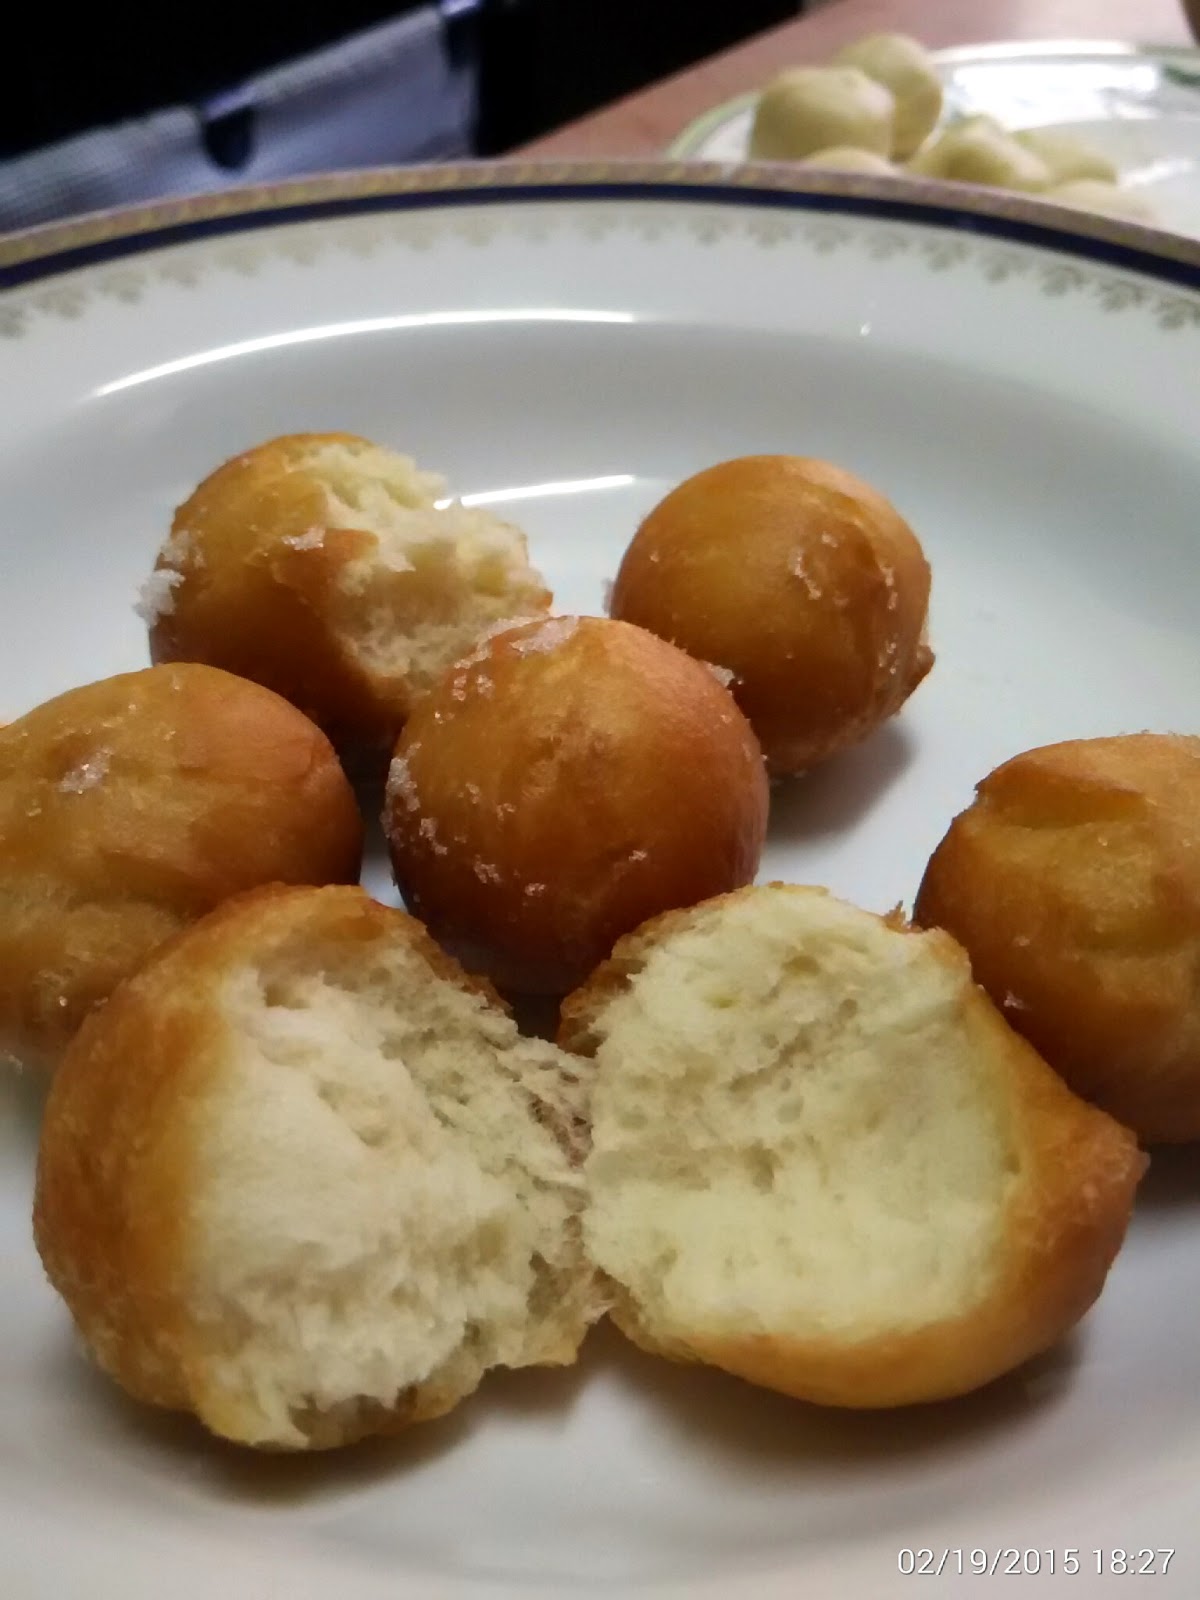 Ina nazir: Resepi donut simple gebu dan sedap